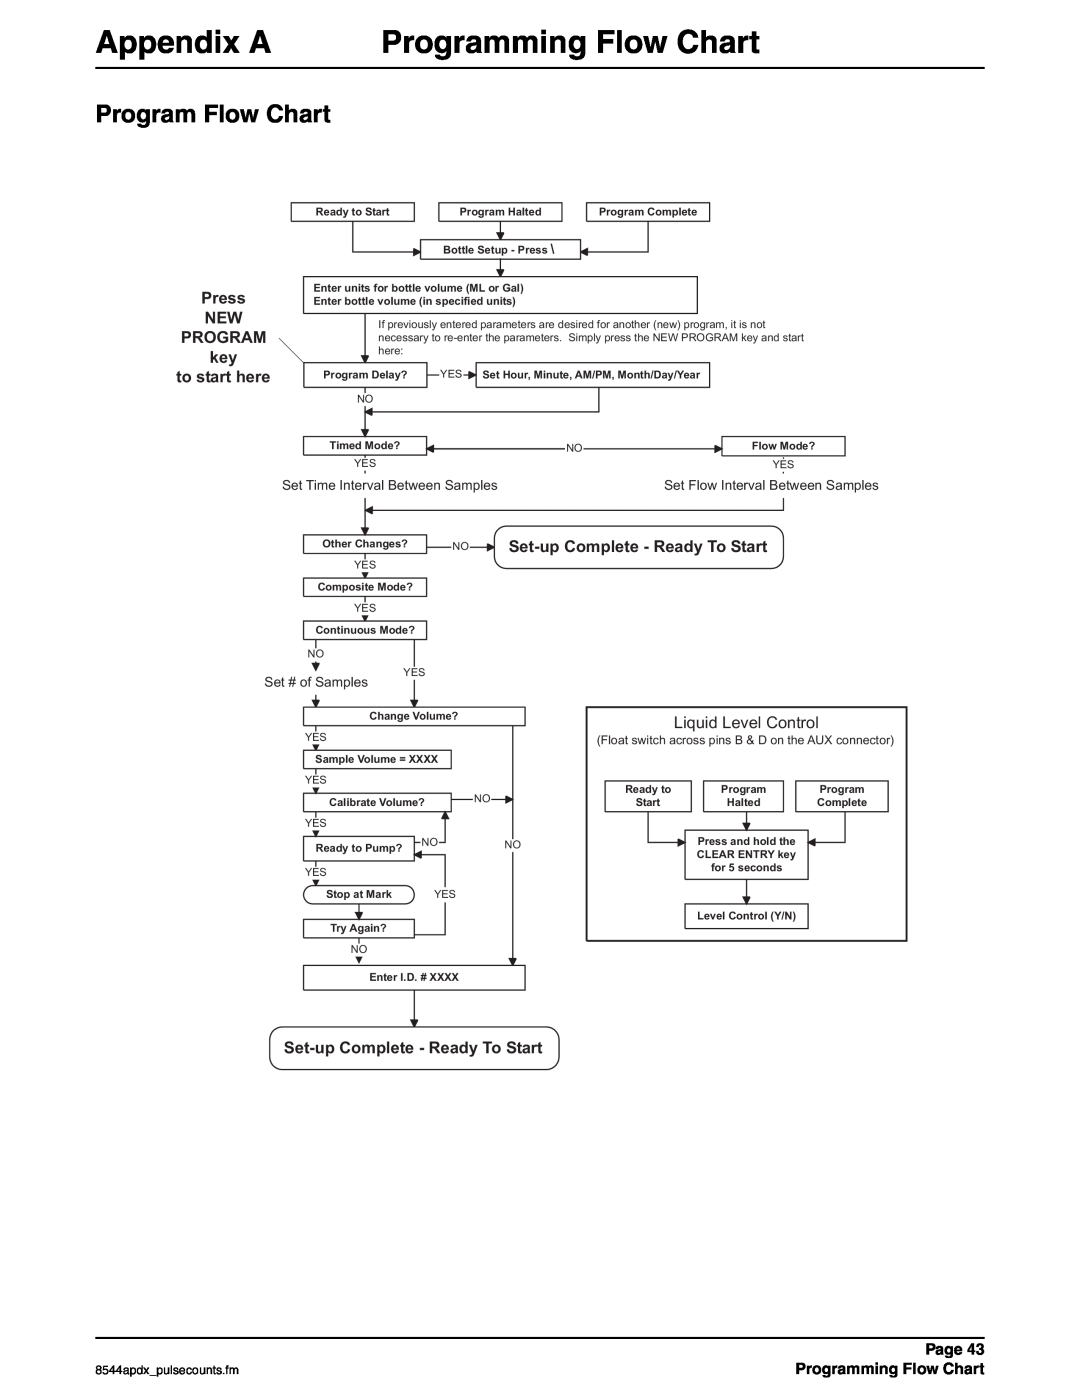 Hach 900 Appendix A Programming Flow Chart, Program Flow Chart, Press NEW PROGRAM key to start here, Liquid Level Control 